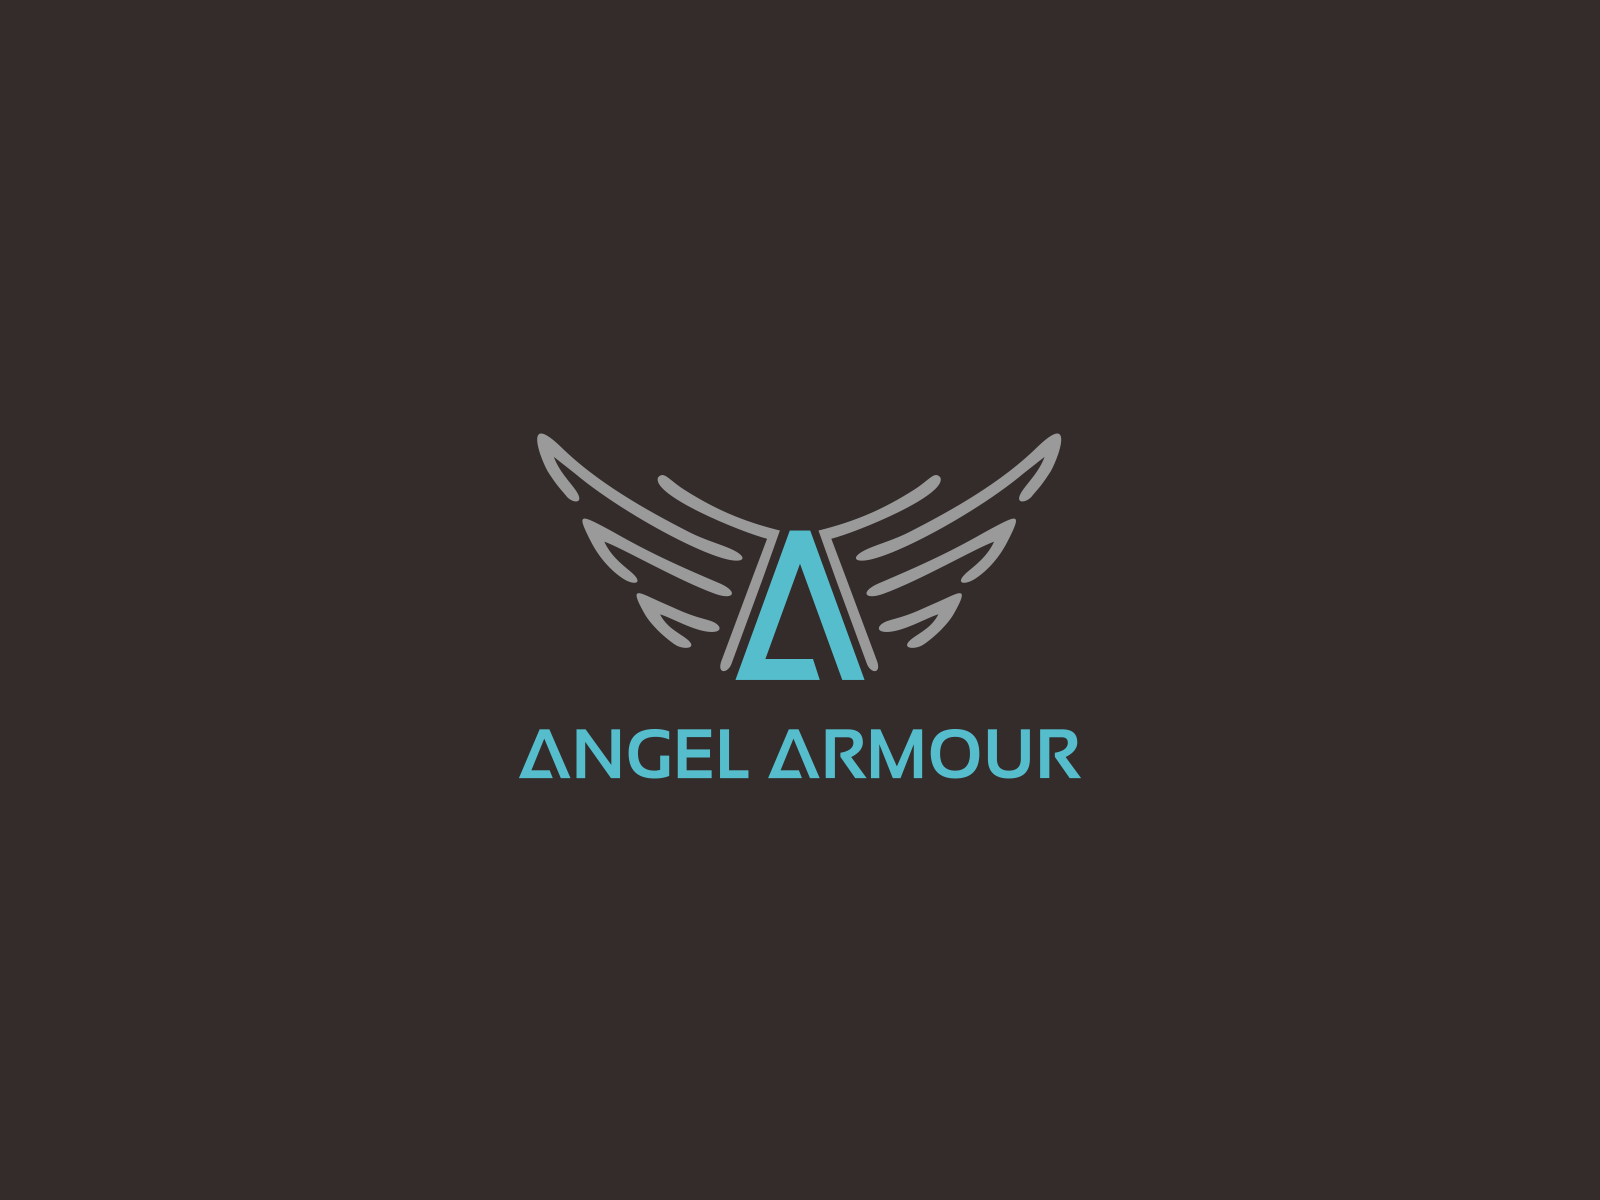 angel armour by wisnu aria on Dribbble